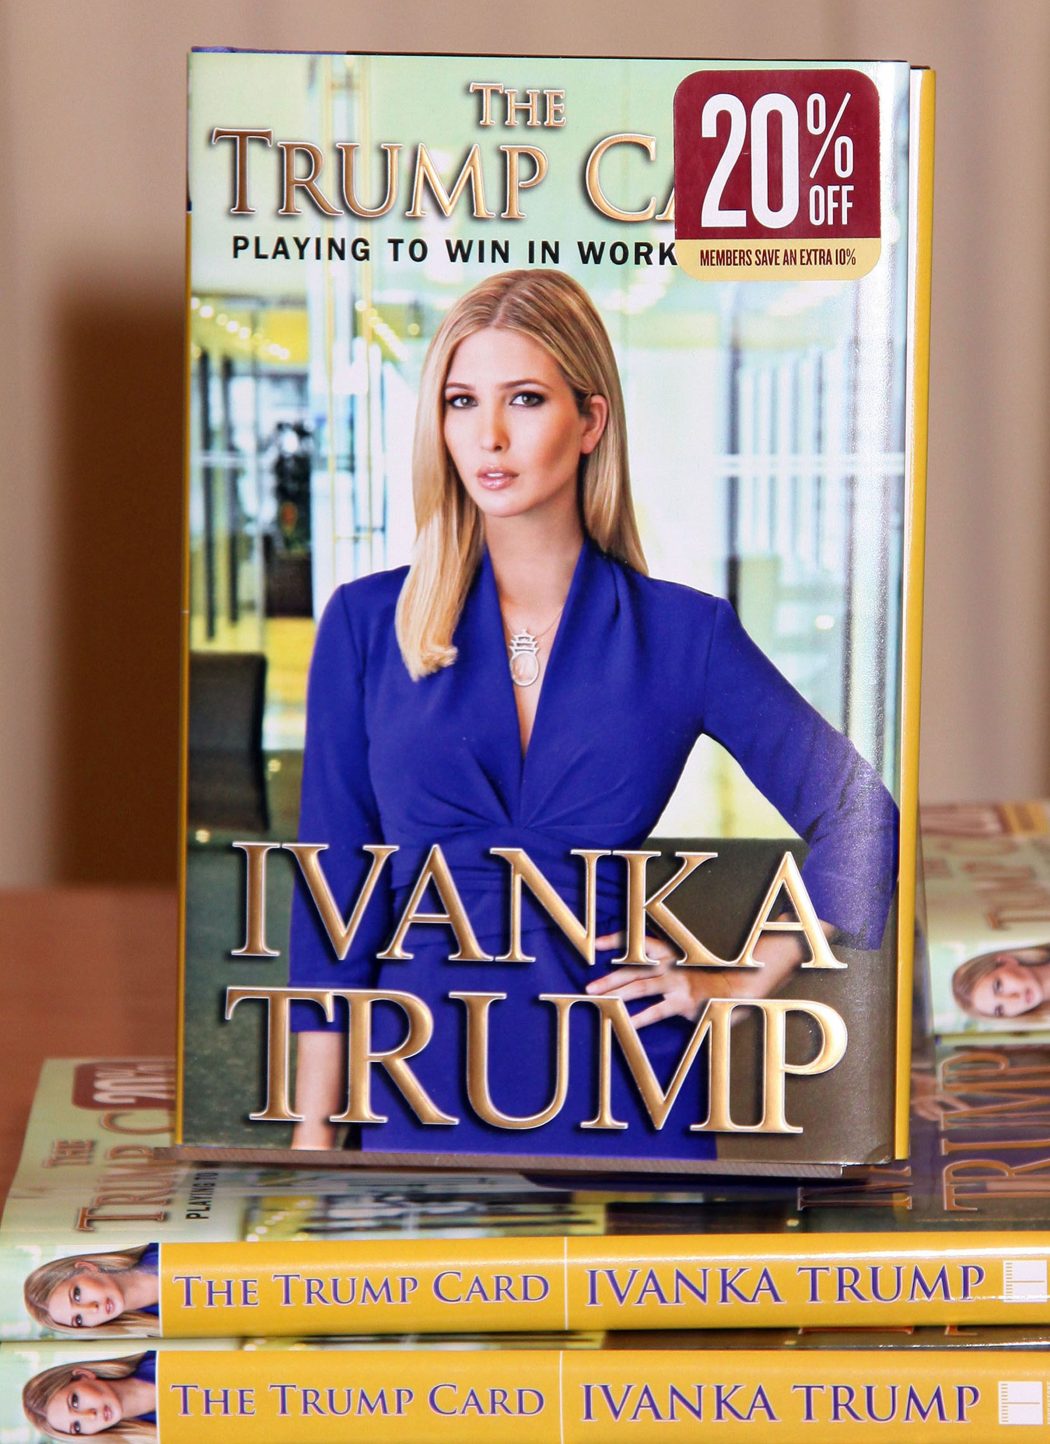 2009-10-cn-ivanka-trump-jewelry3 10 Strangest Ivanka Trump’s Brand Facts